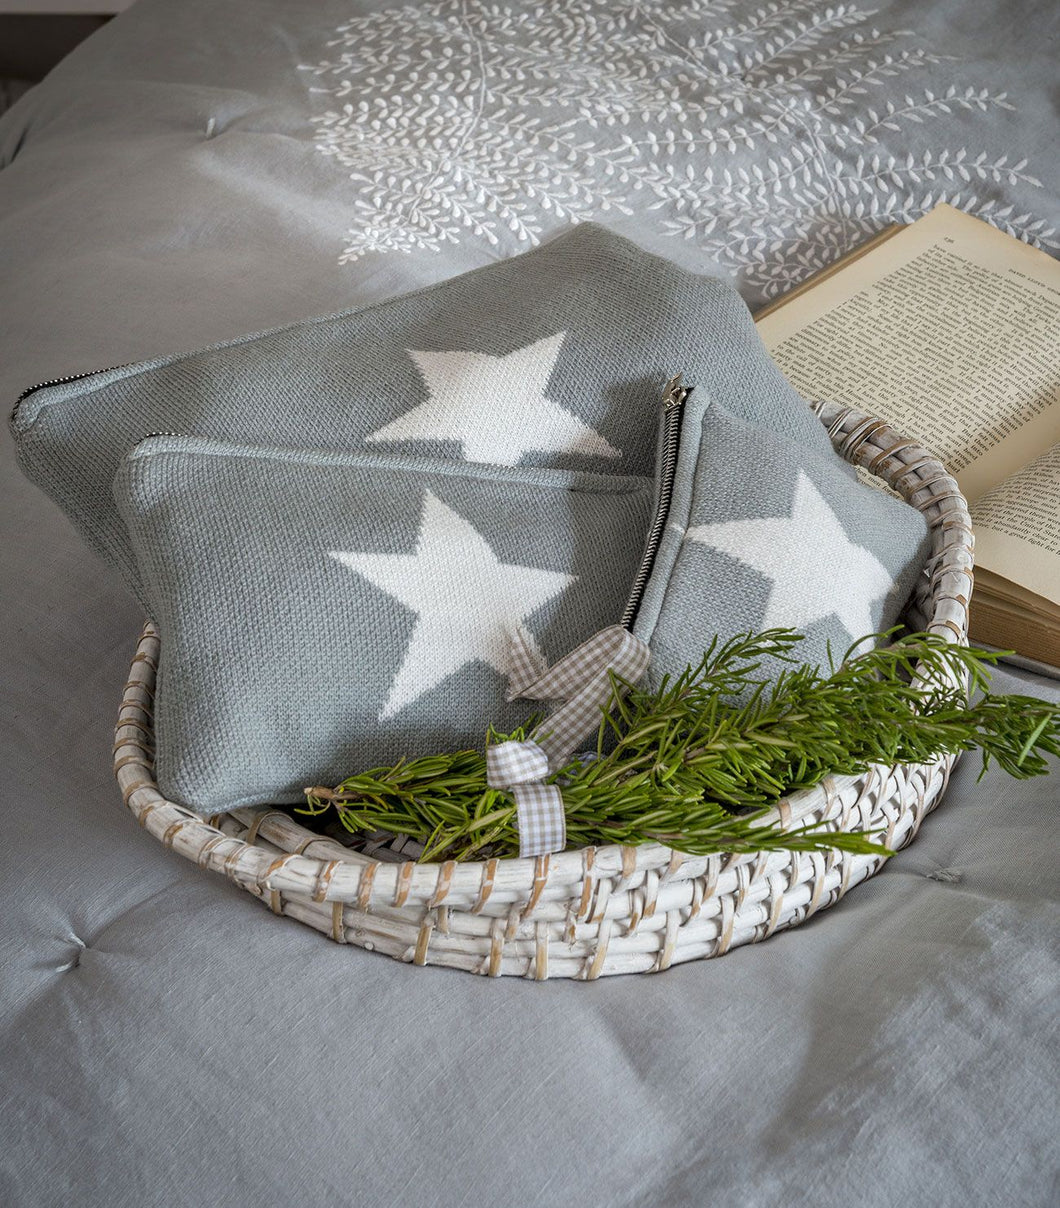 Knitted star make up bag … large